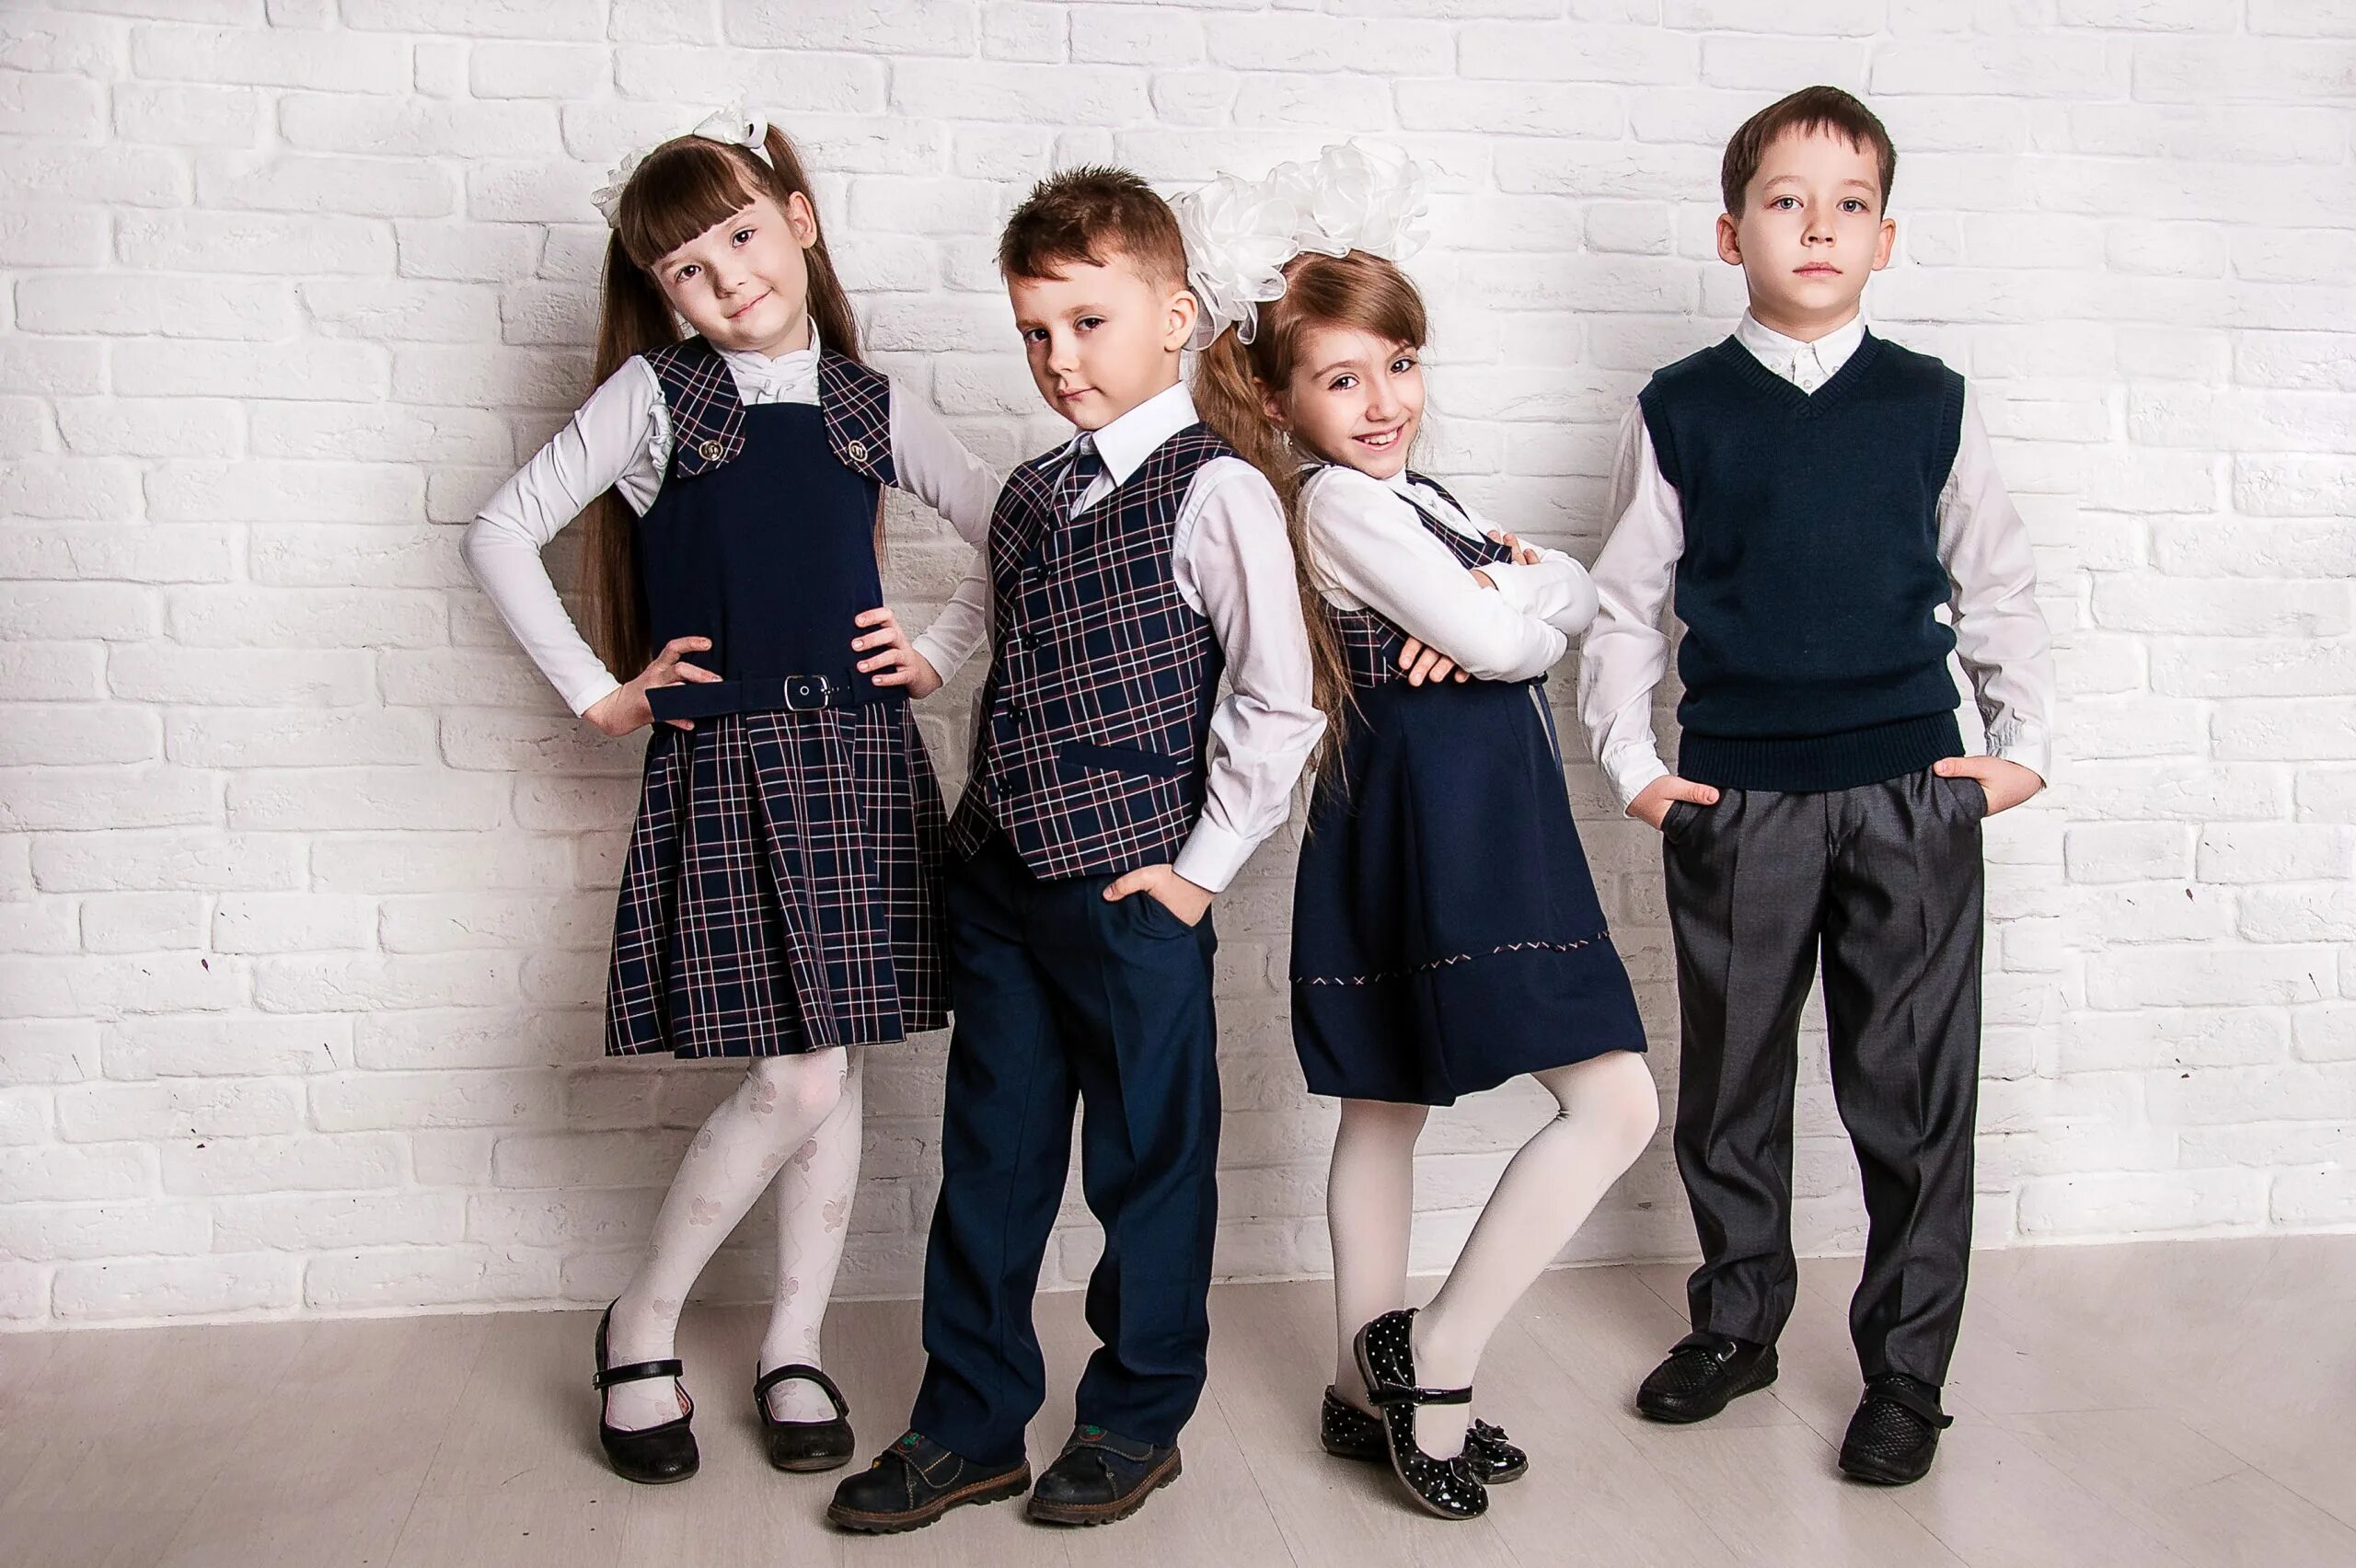 School форма. ДЕЛСТИ Краснодар. Школьная форма. Современная Школьная форма. Дети в школьной форме.